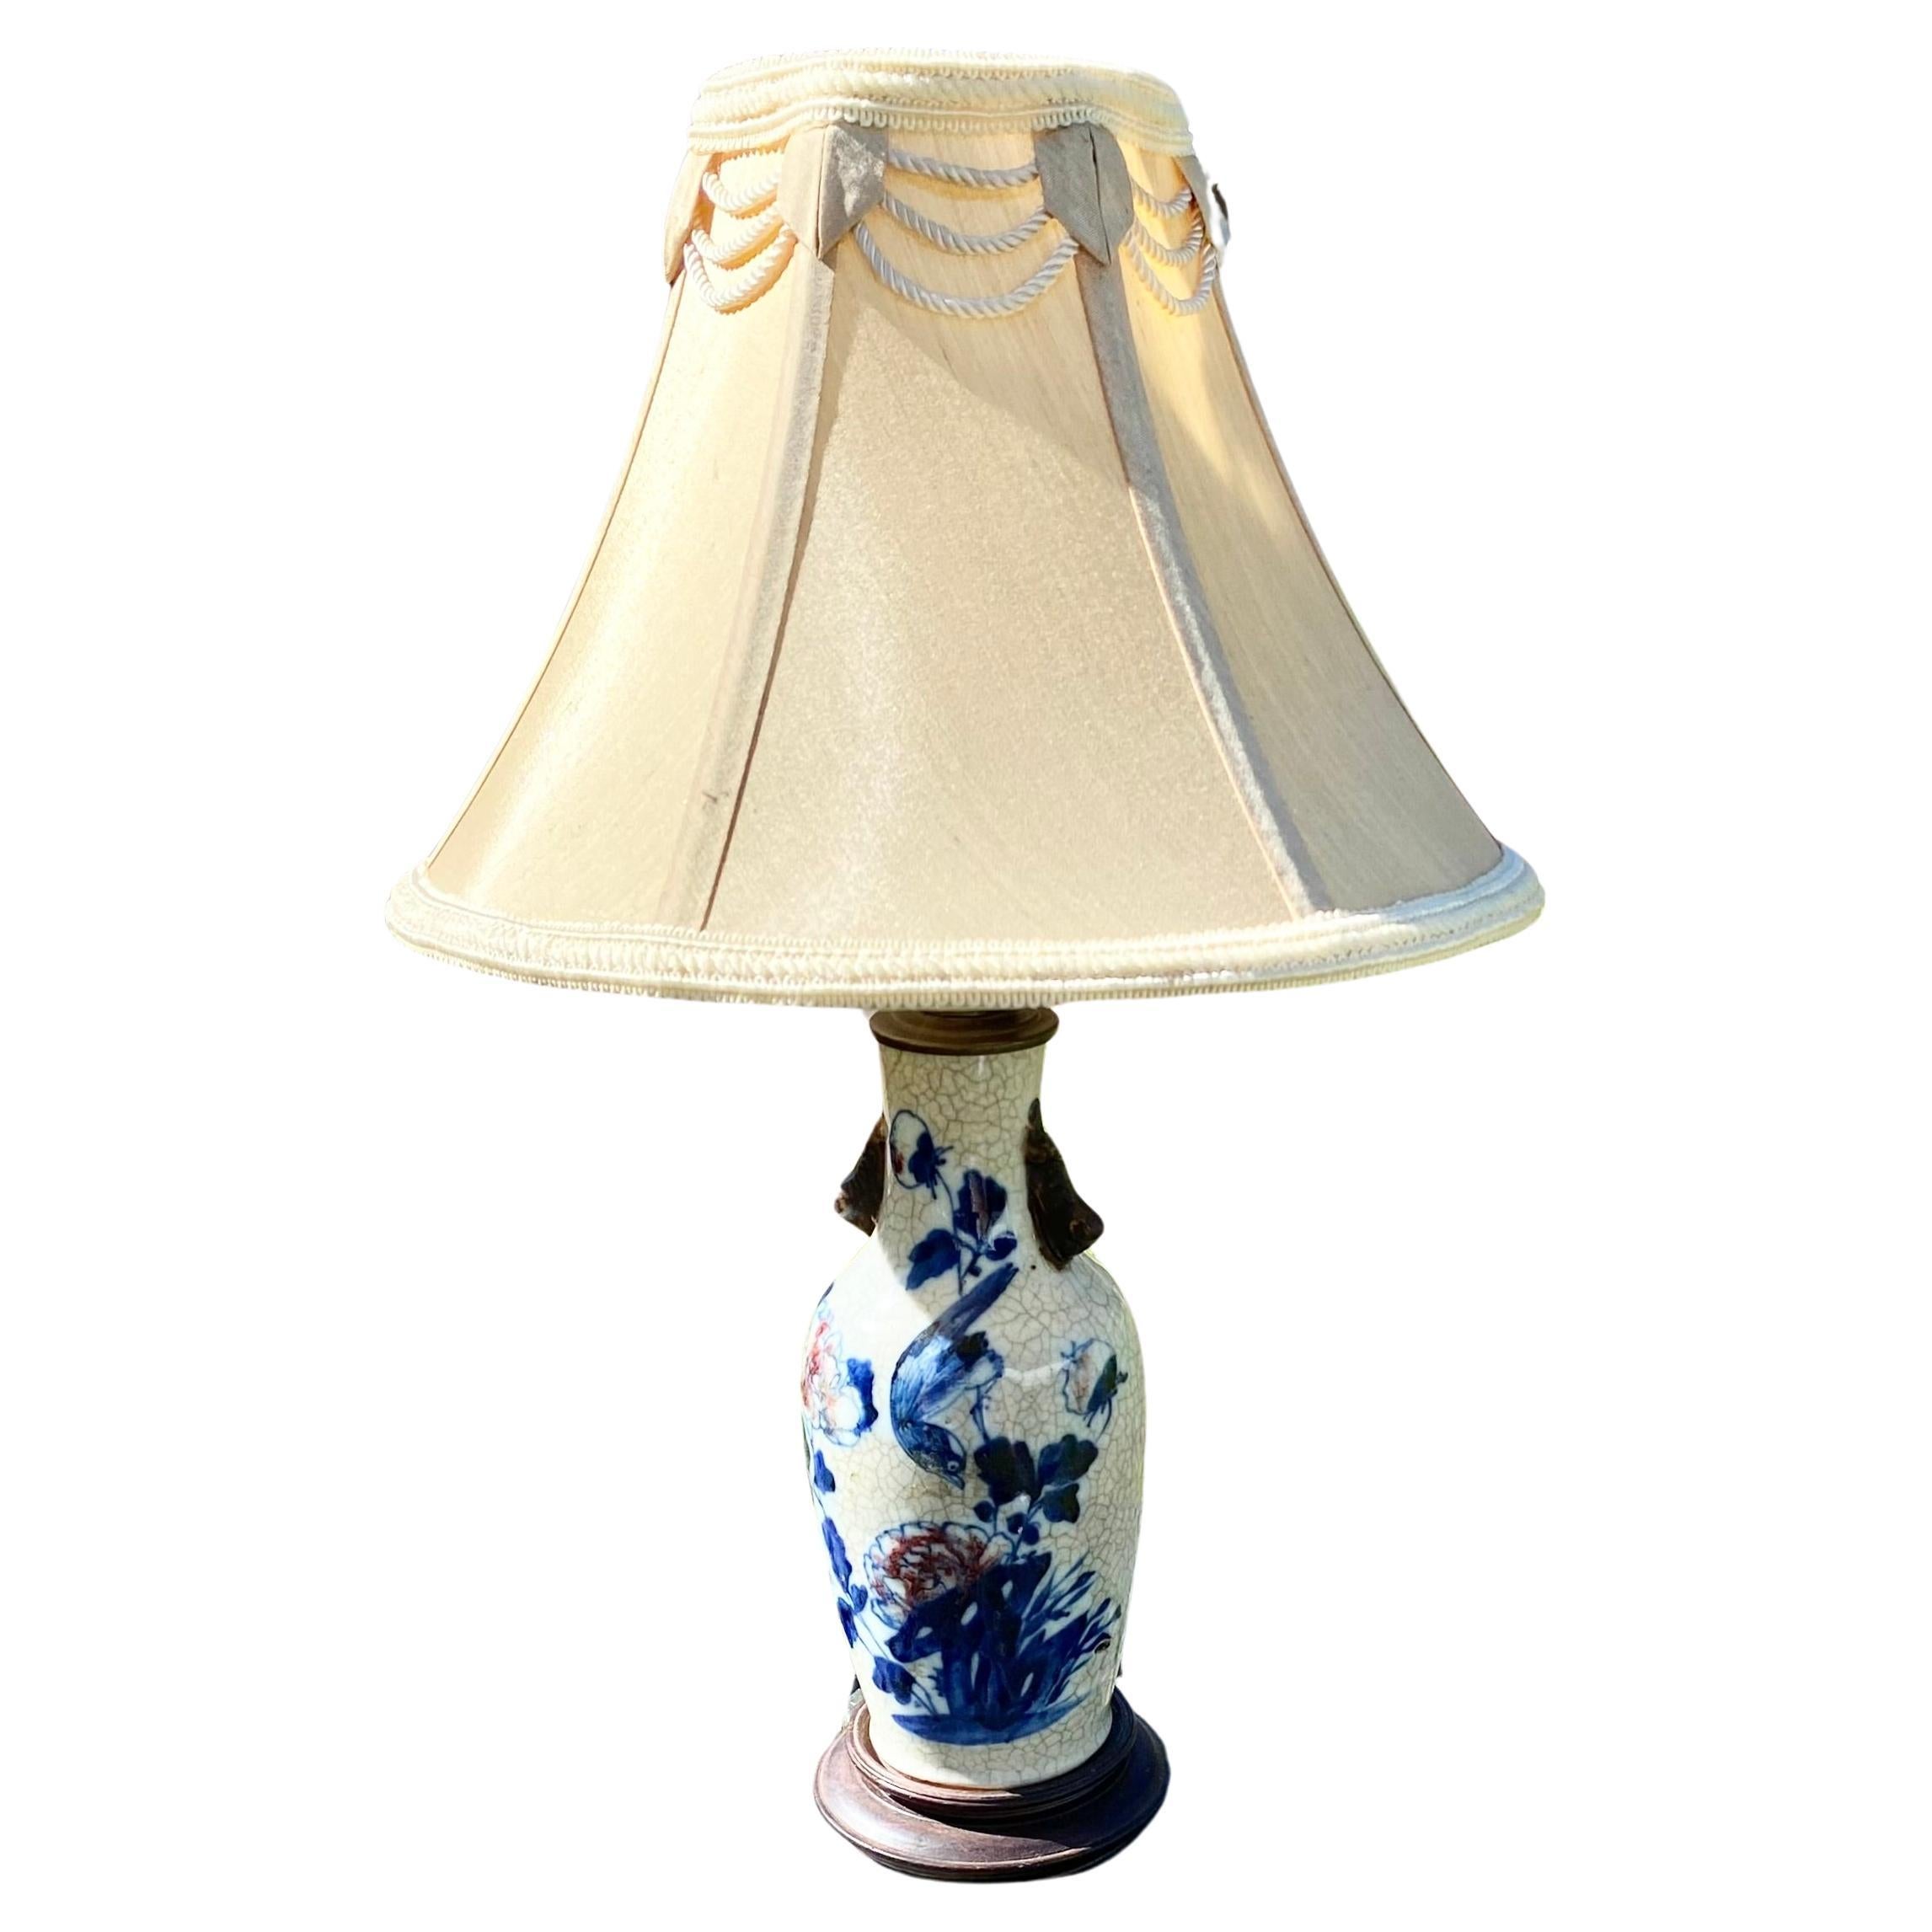 Antique Oriental Porcelain Vase Lamp Off White and Blue Perched Bird